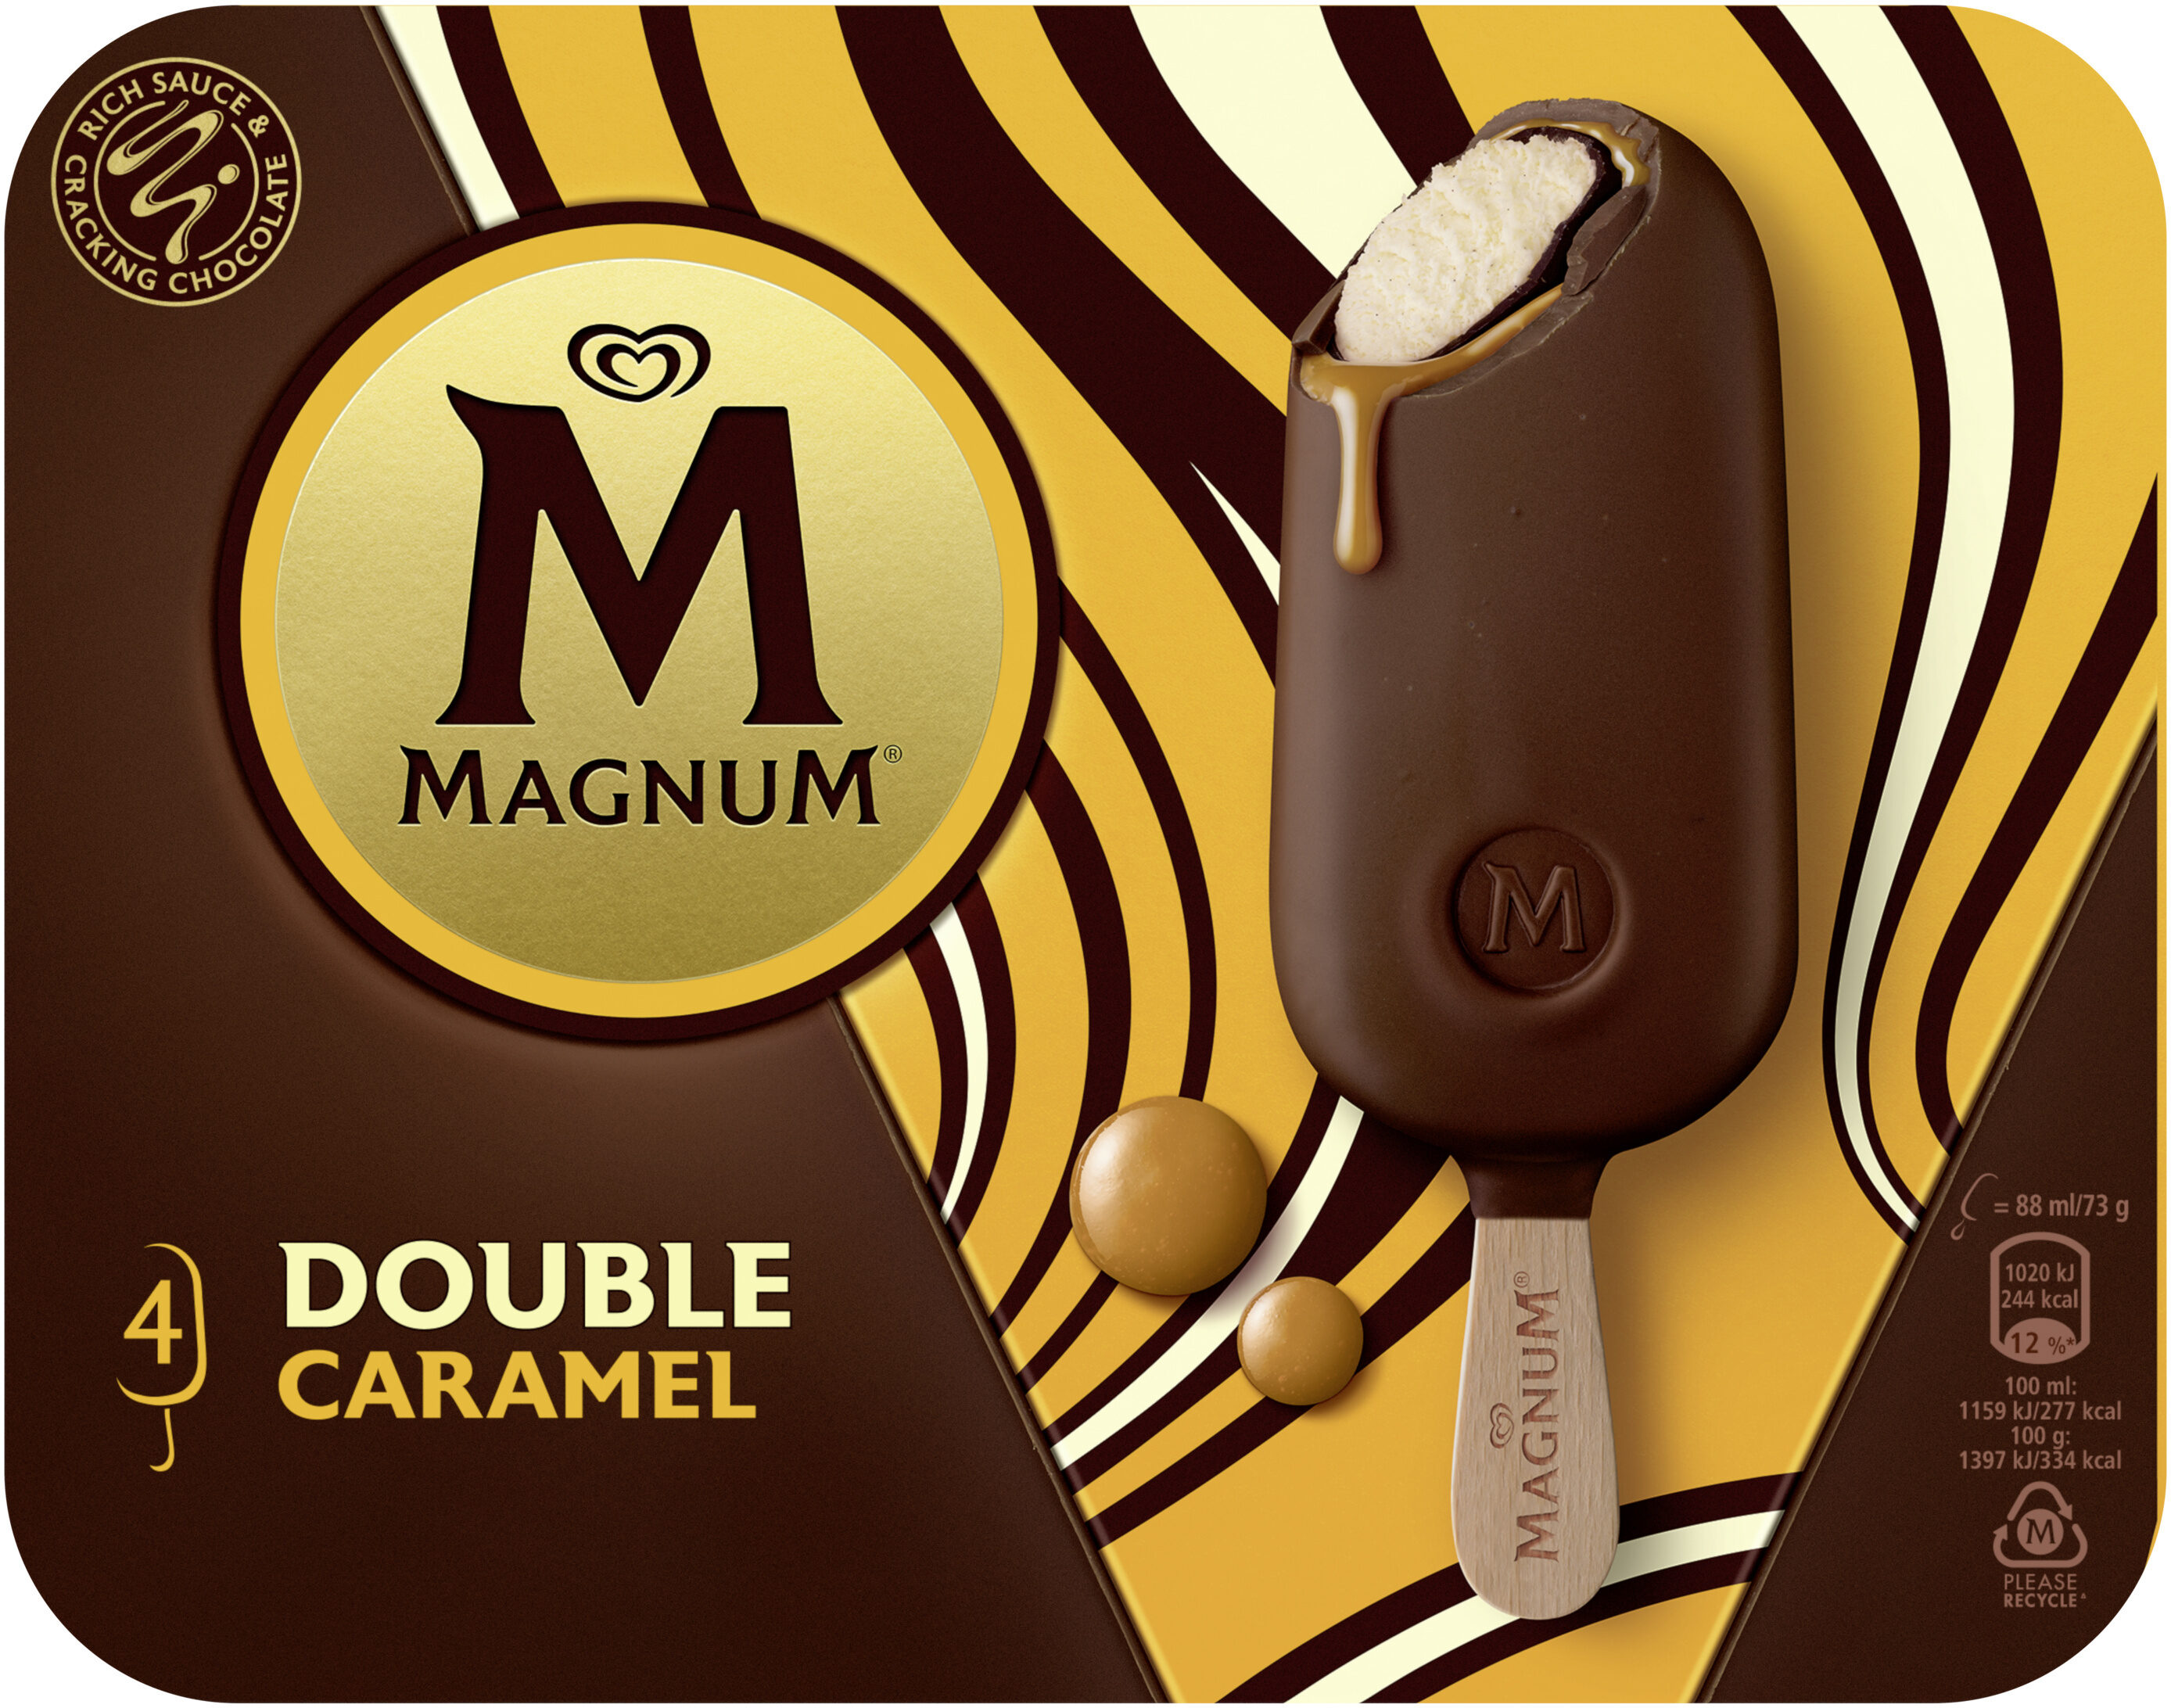 Magnum Glace Bâtonnet Double Caramel 4x88ml - Product - fr